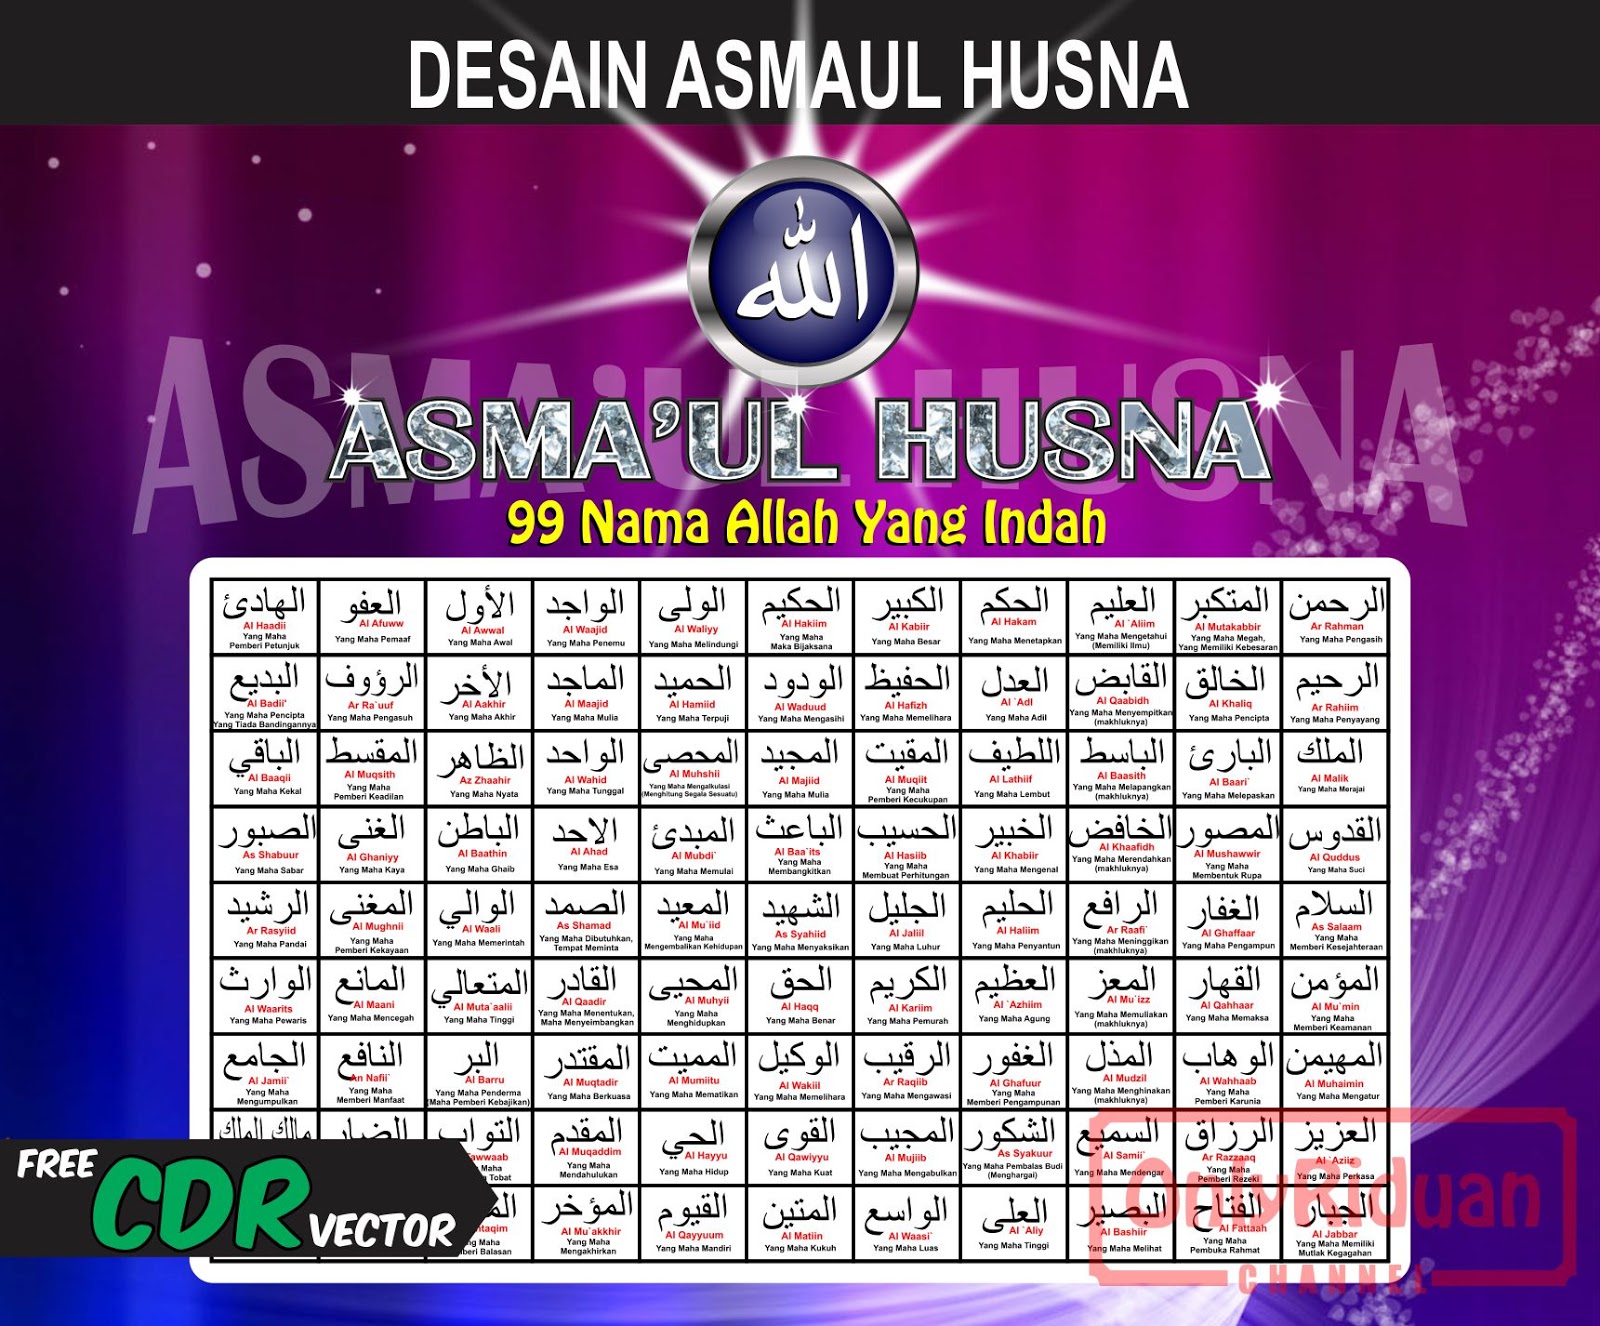 Desain Asmaul Husna Dengan Coreldraw Free Cdr Tutoriduan Com